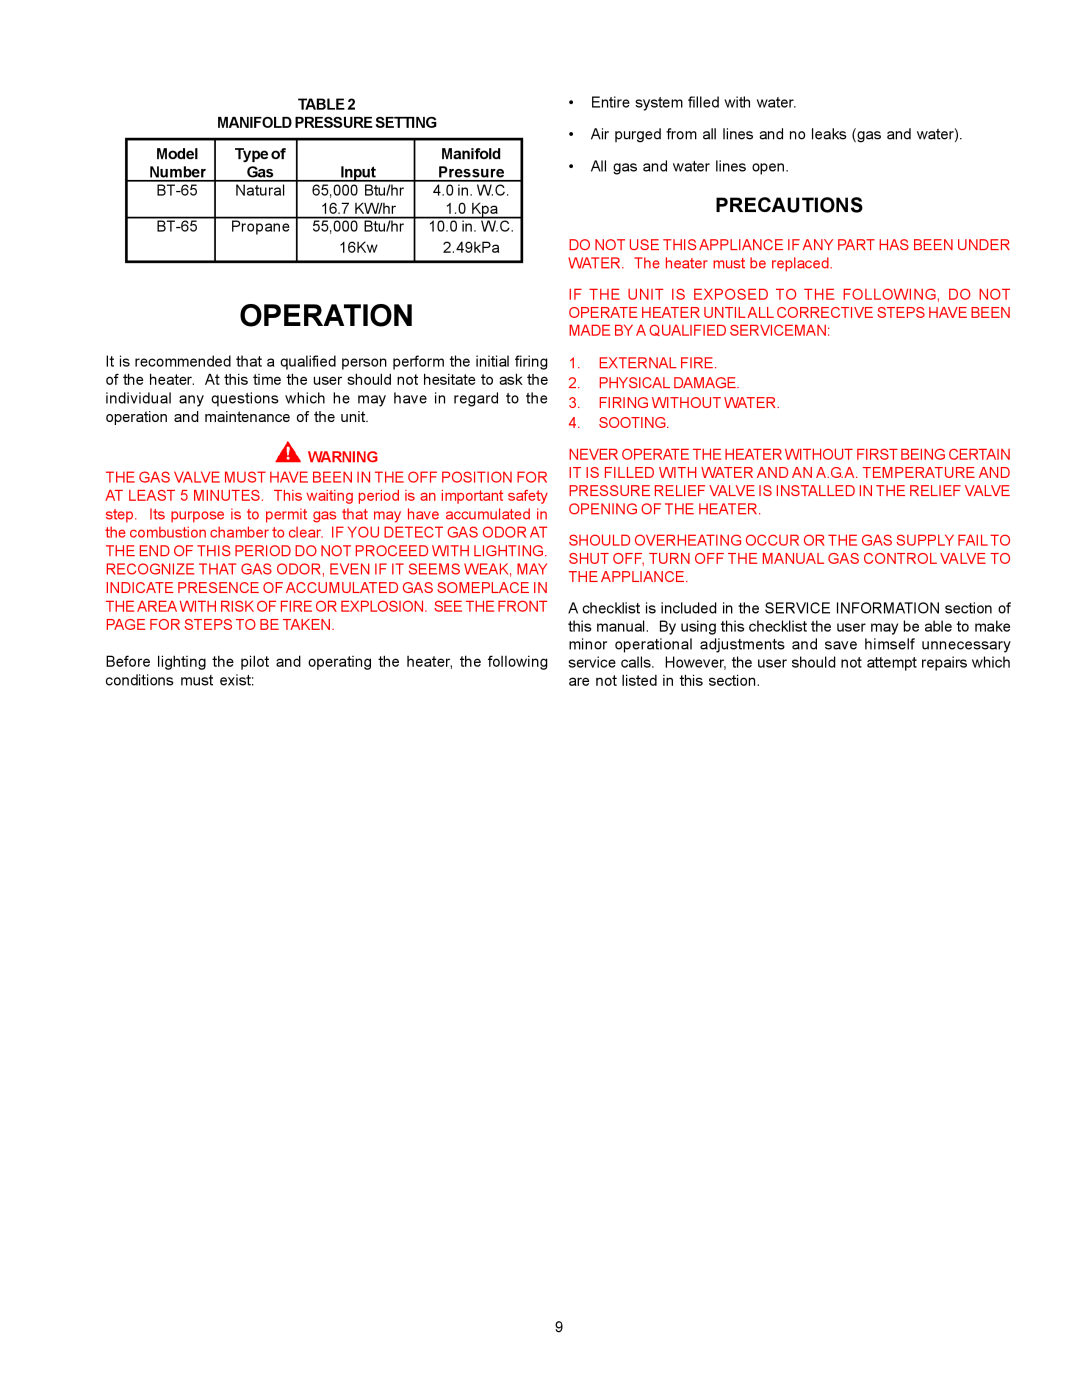 A.O. Smith BT- 65 warranty Operation, Manifold Pressure Setting, Model, Type of, Precautions 